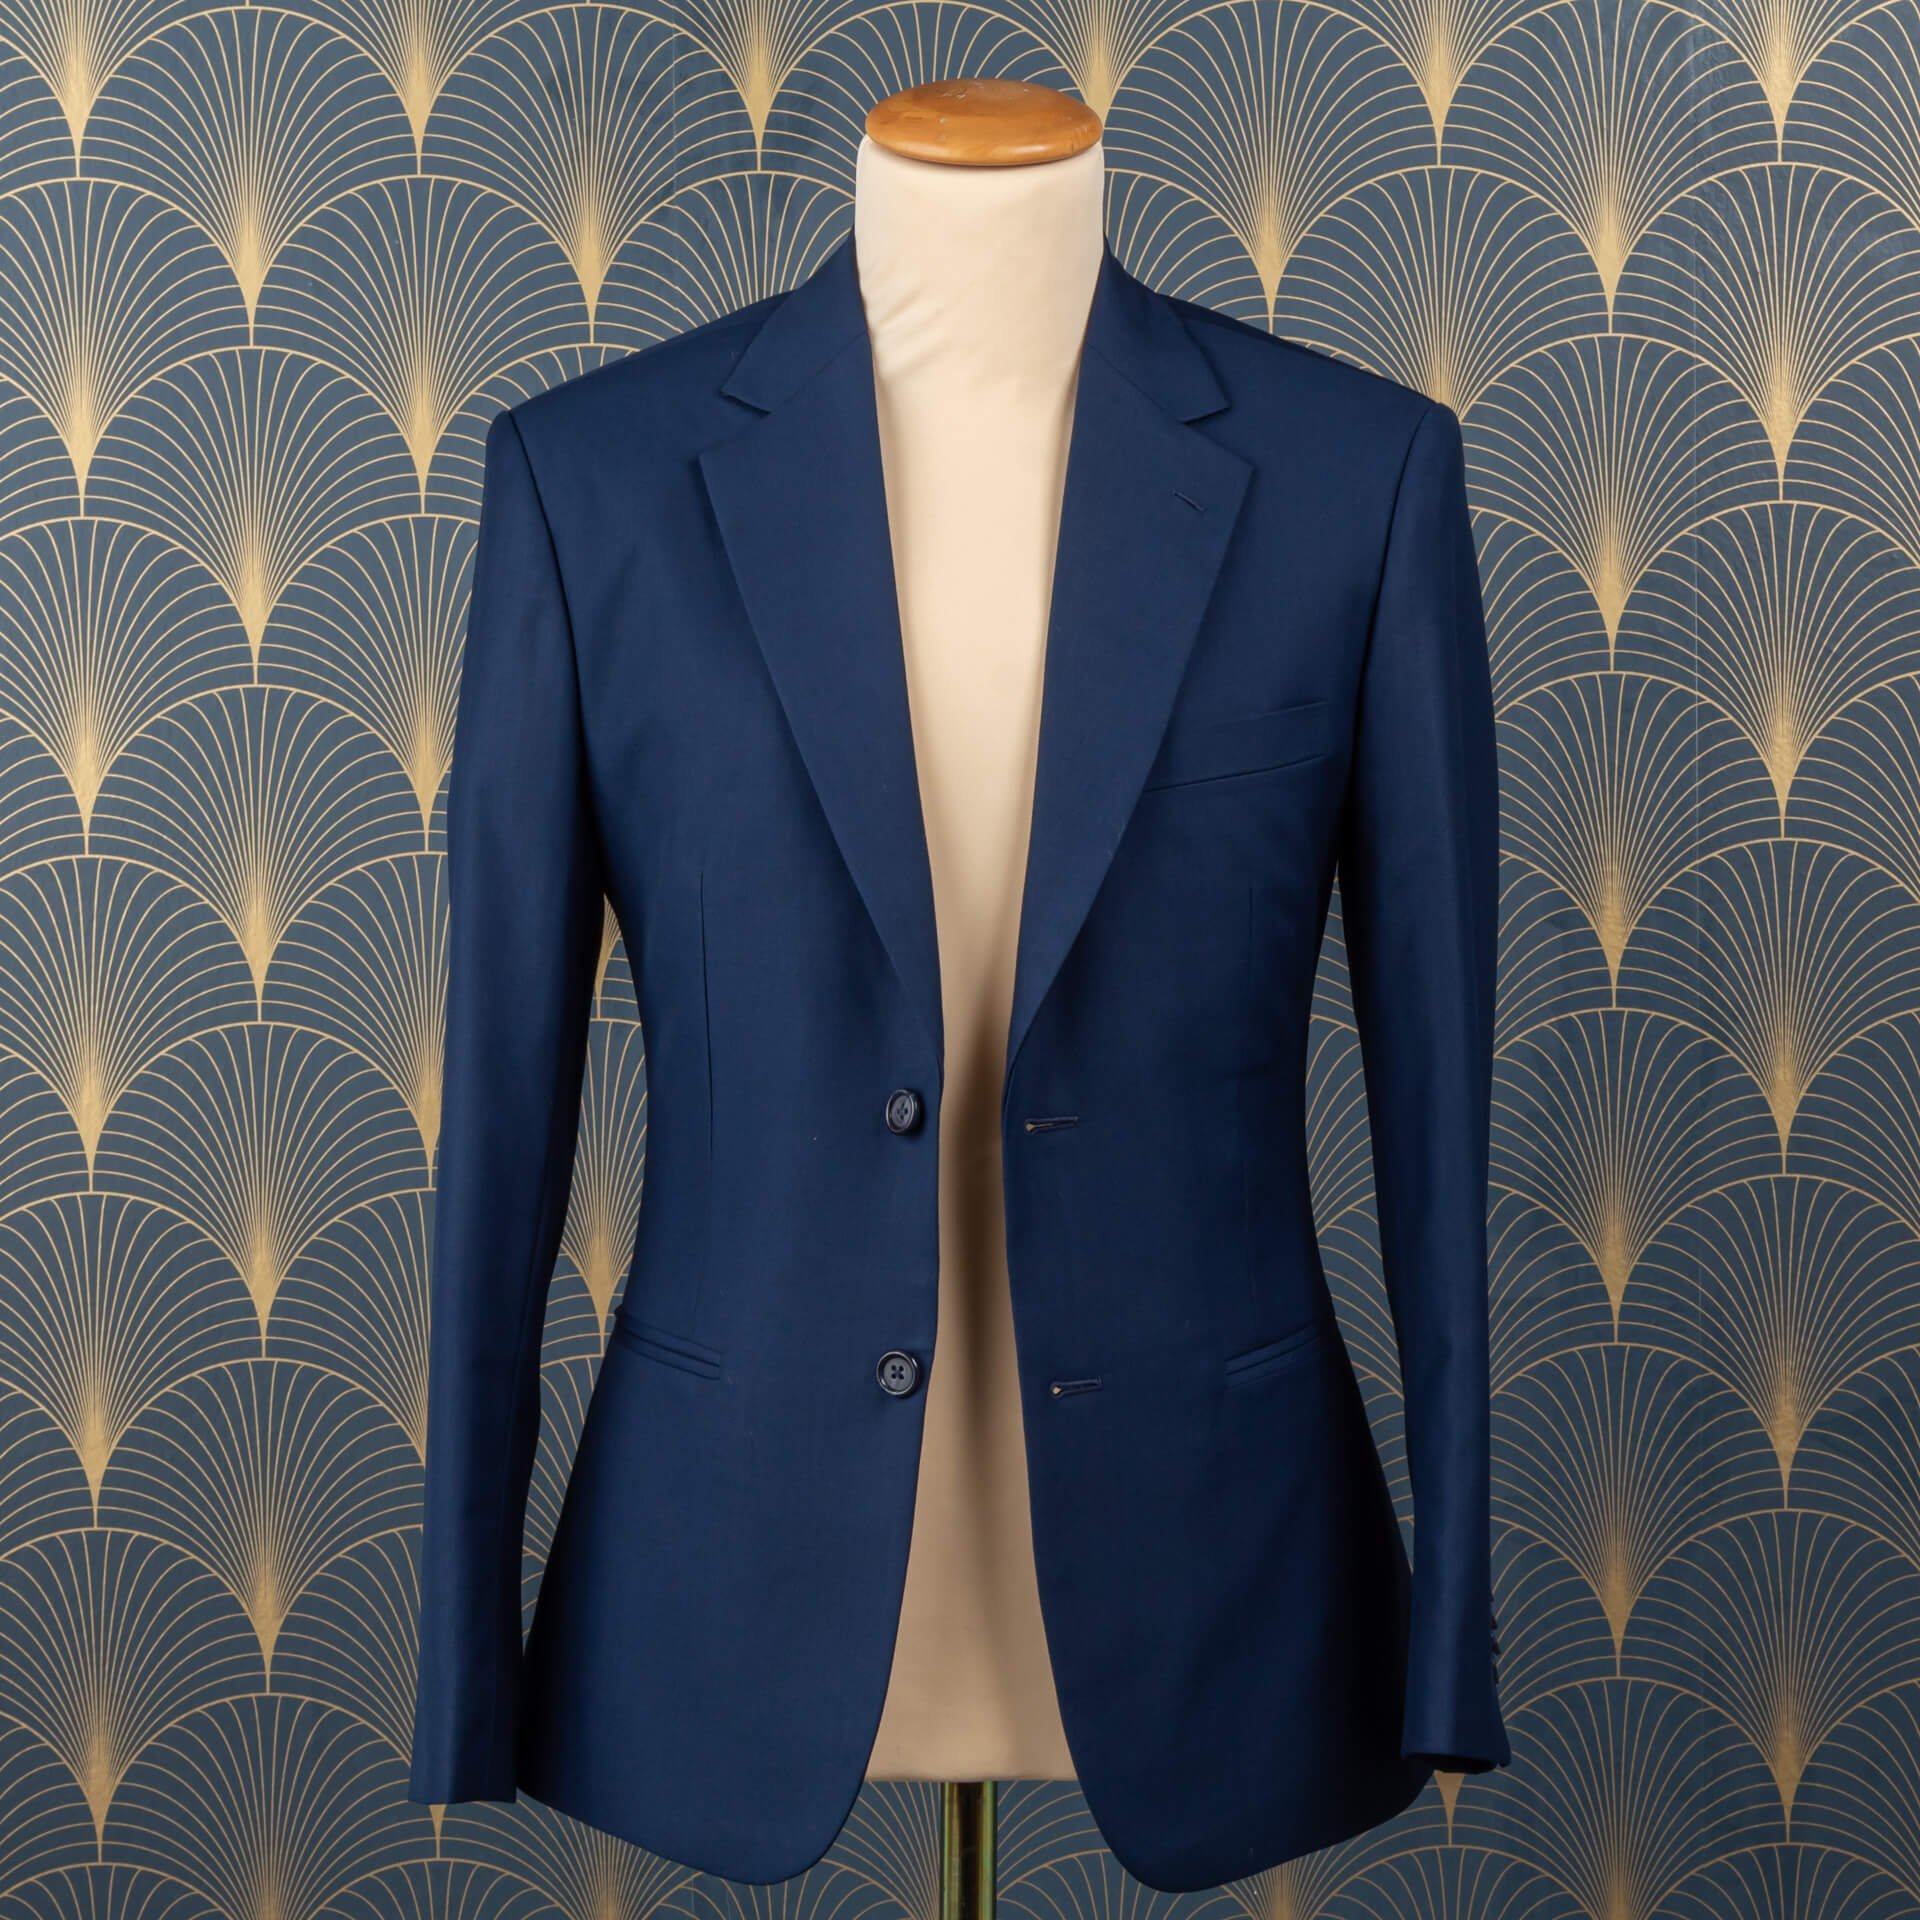 Blue Tailored Jacket